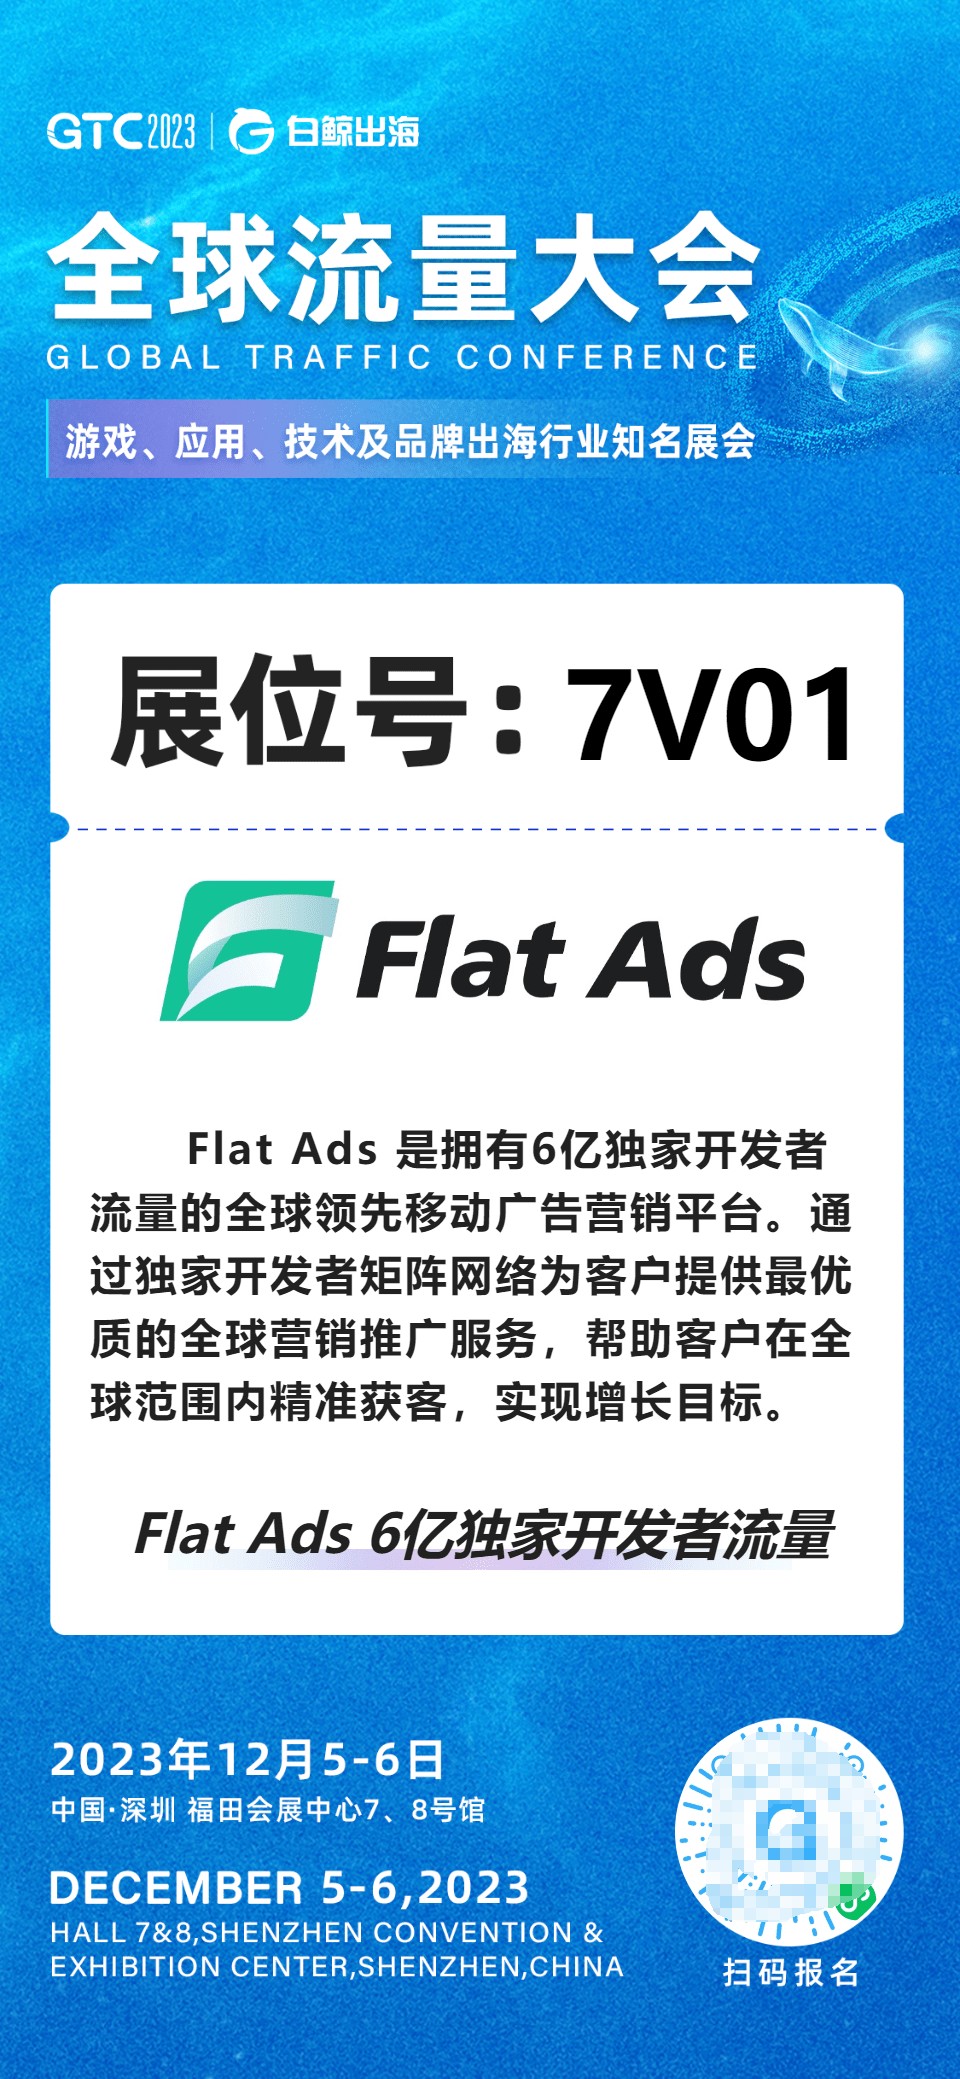 Flat Ads将携6亿流量亮相白鲸GTC2023，在7V01展台等你